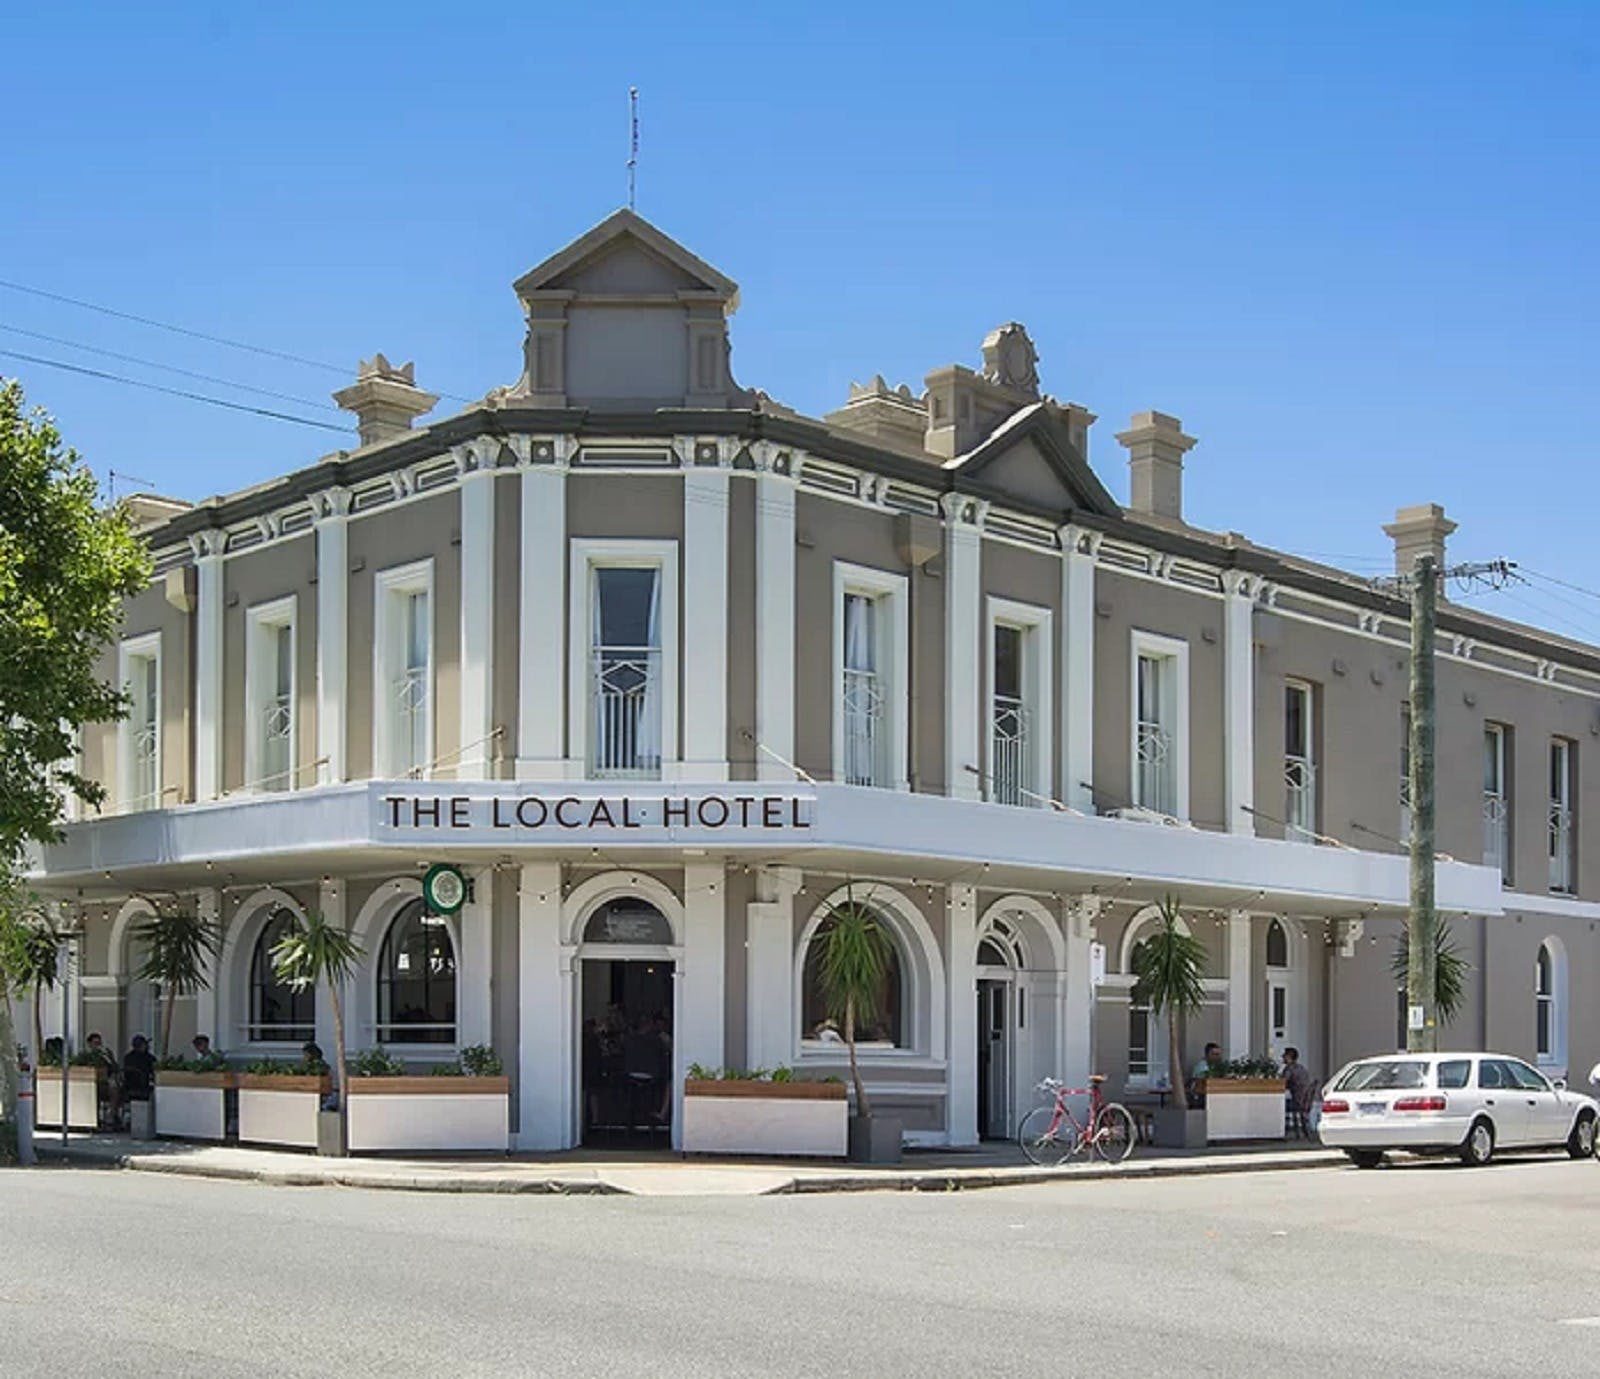 The Local Hotel, Fremantle, Western Australia